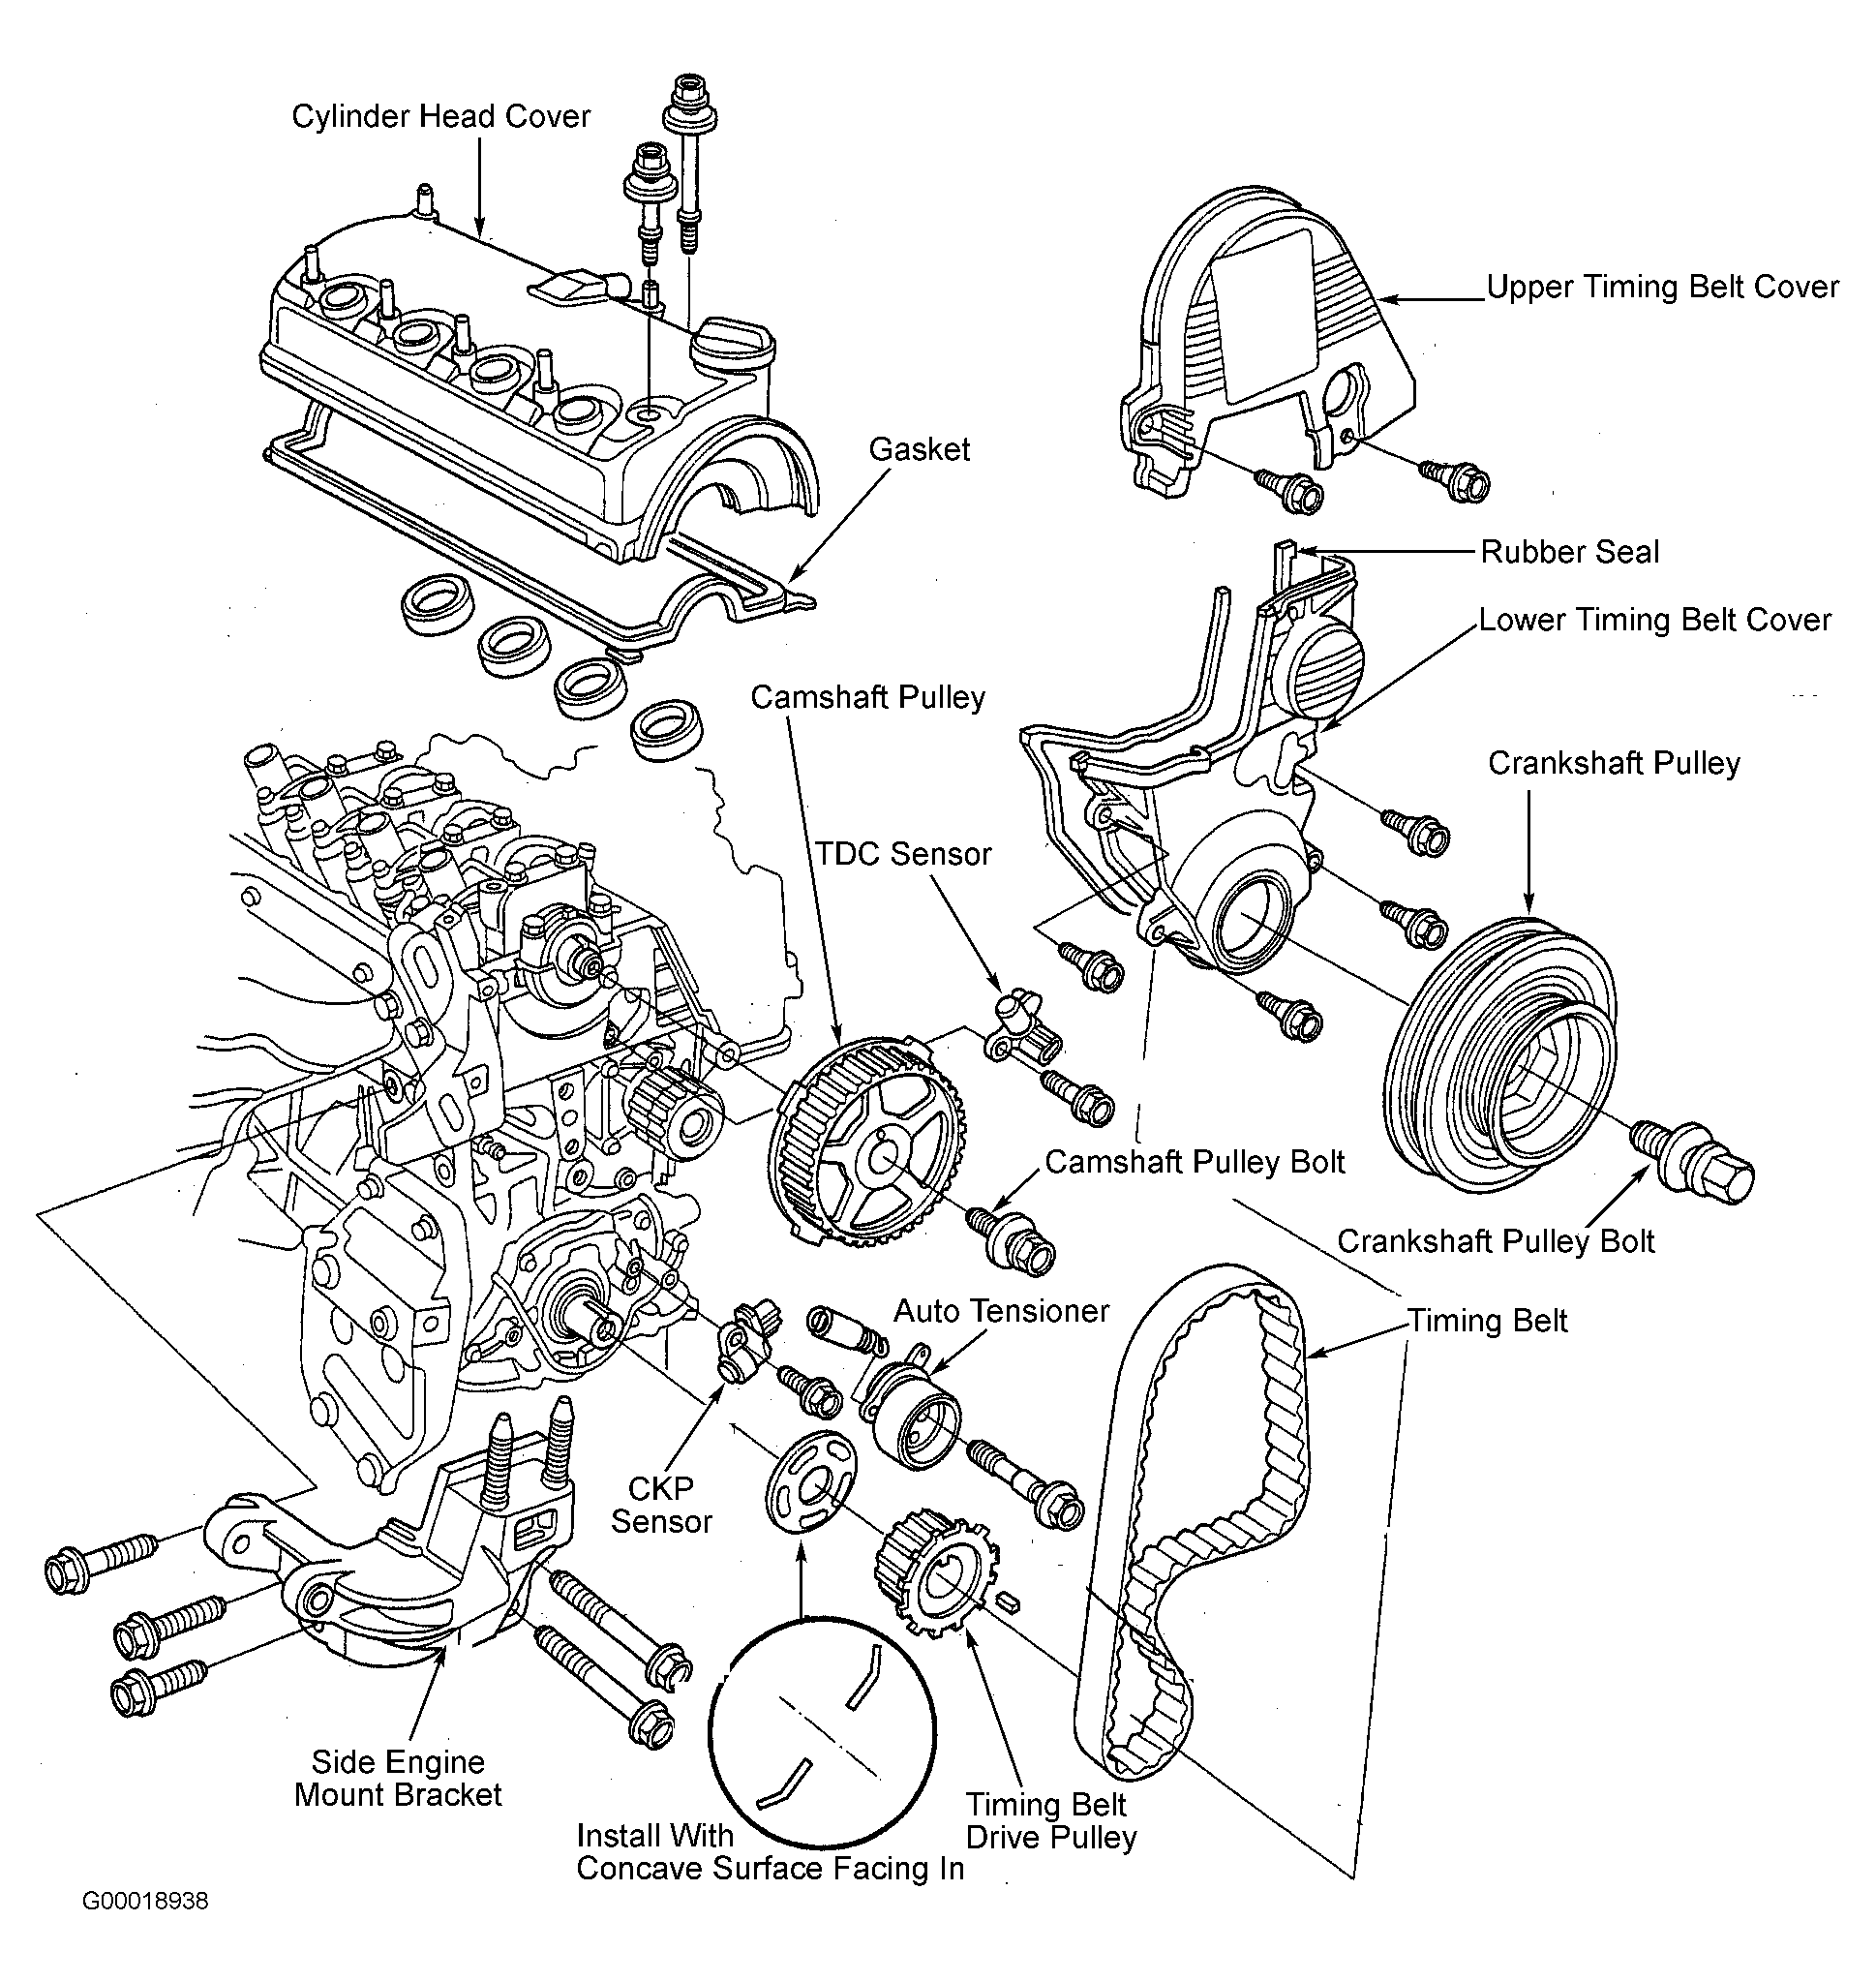 2001 Honda Civic Serpentine Belt Routing And Timing Belt Diagrams